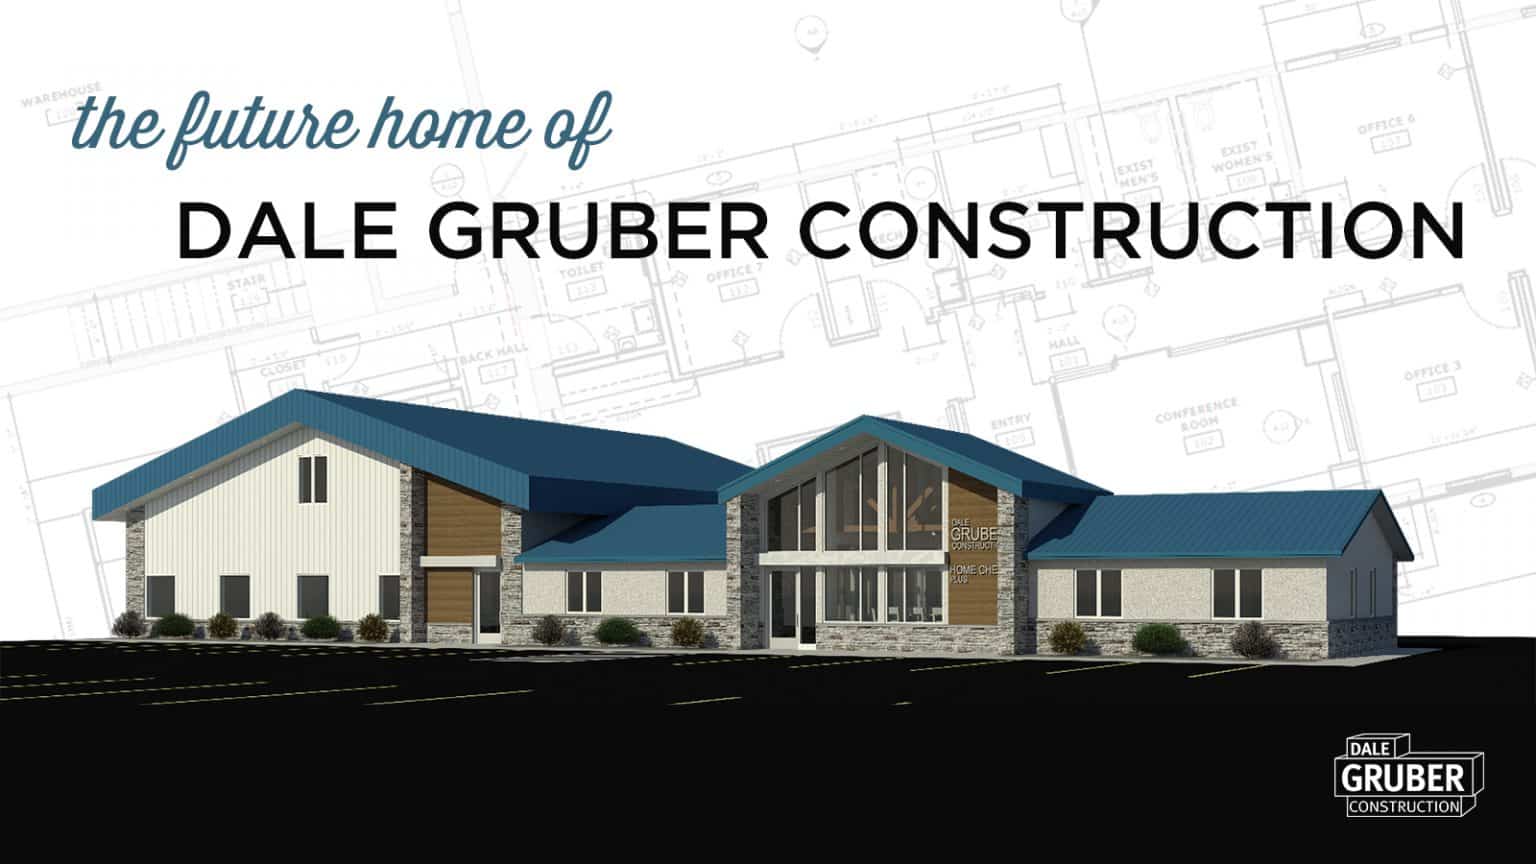 The Future Home of dale gruber